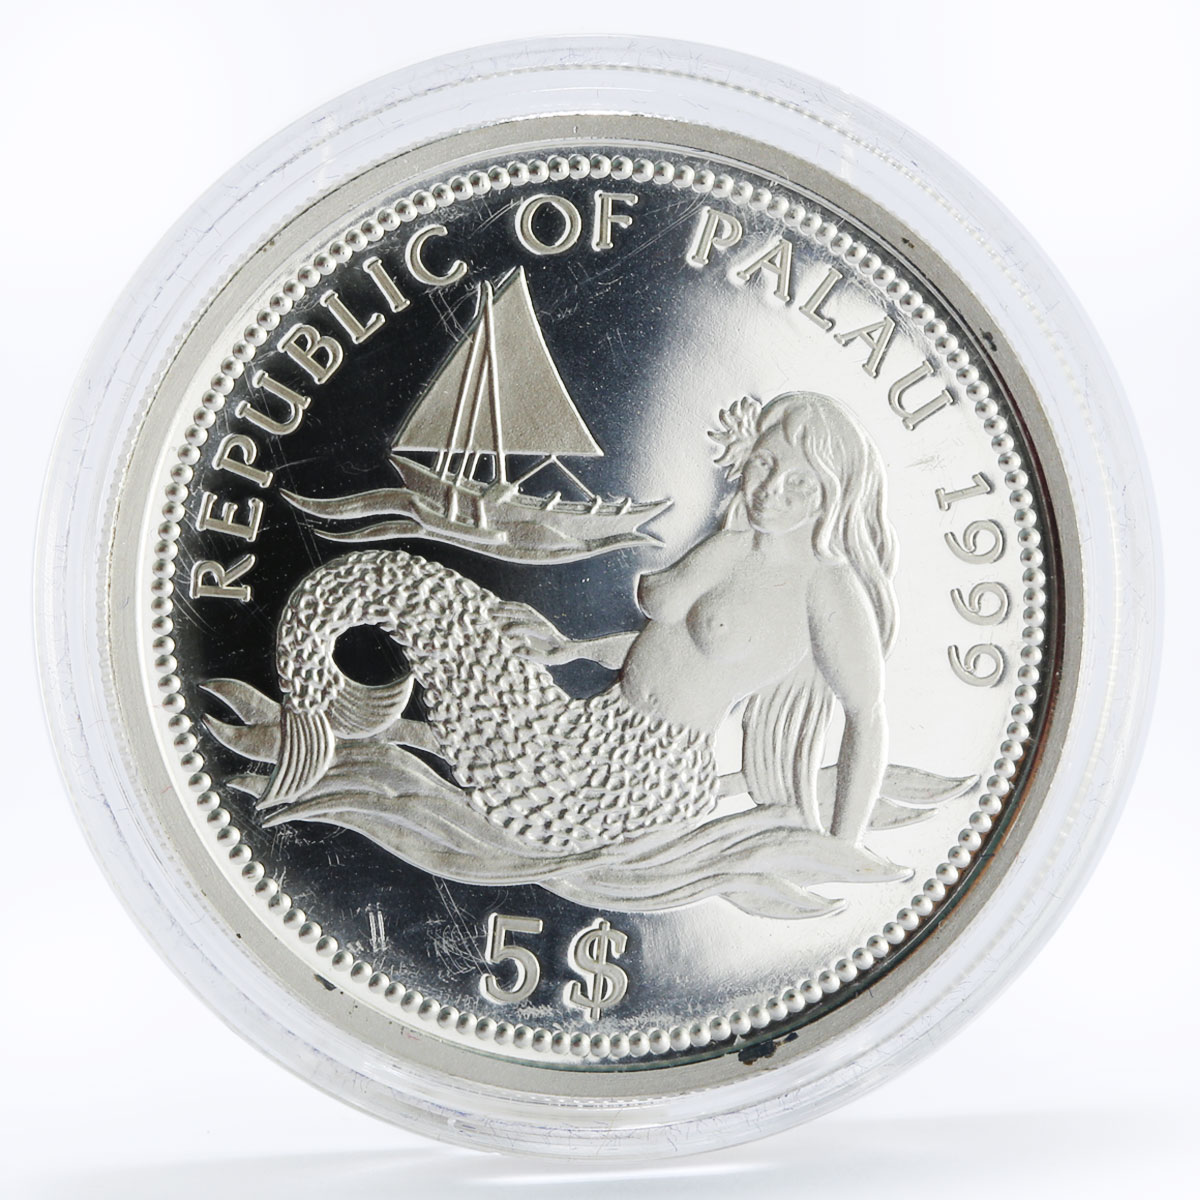 Palau 5 dollars Marine Life Protection series White Shark silver coin 1999